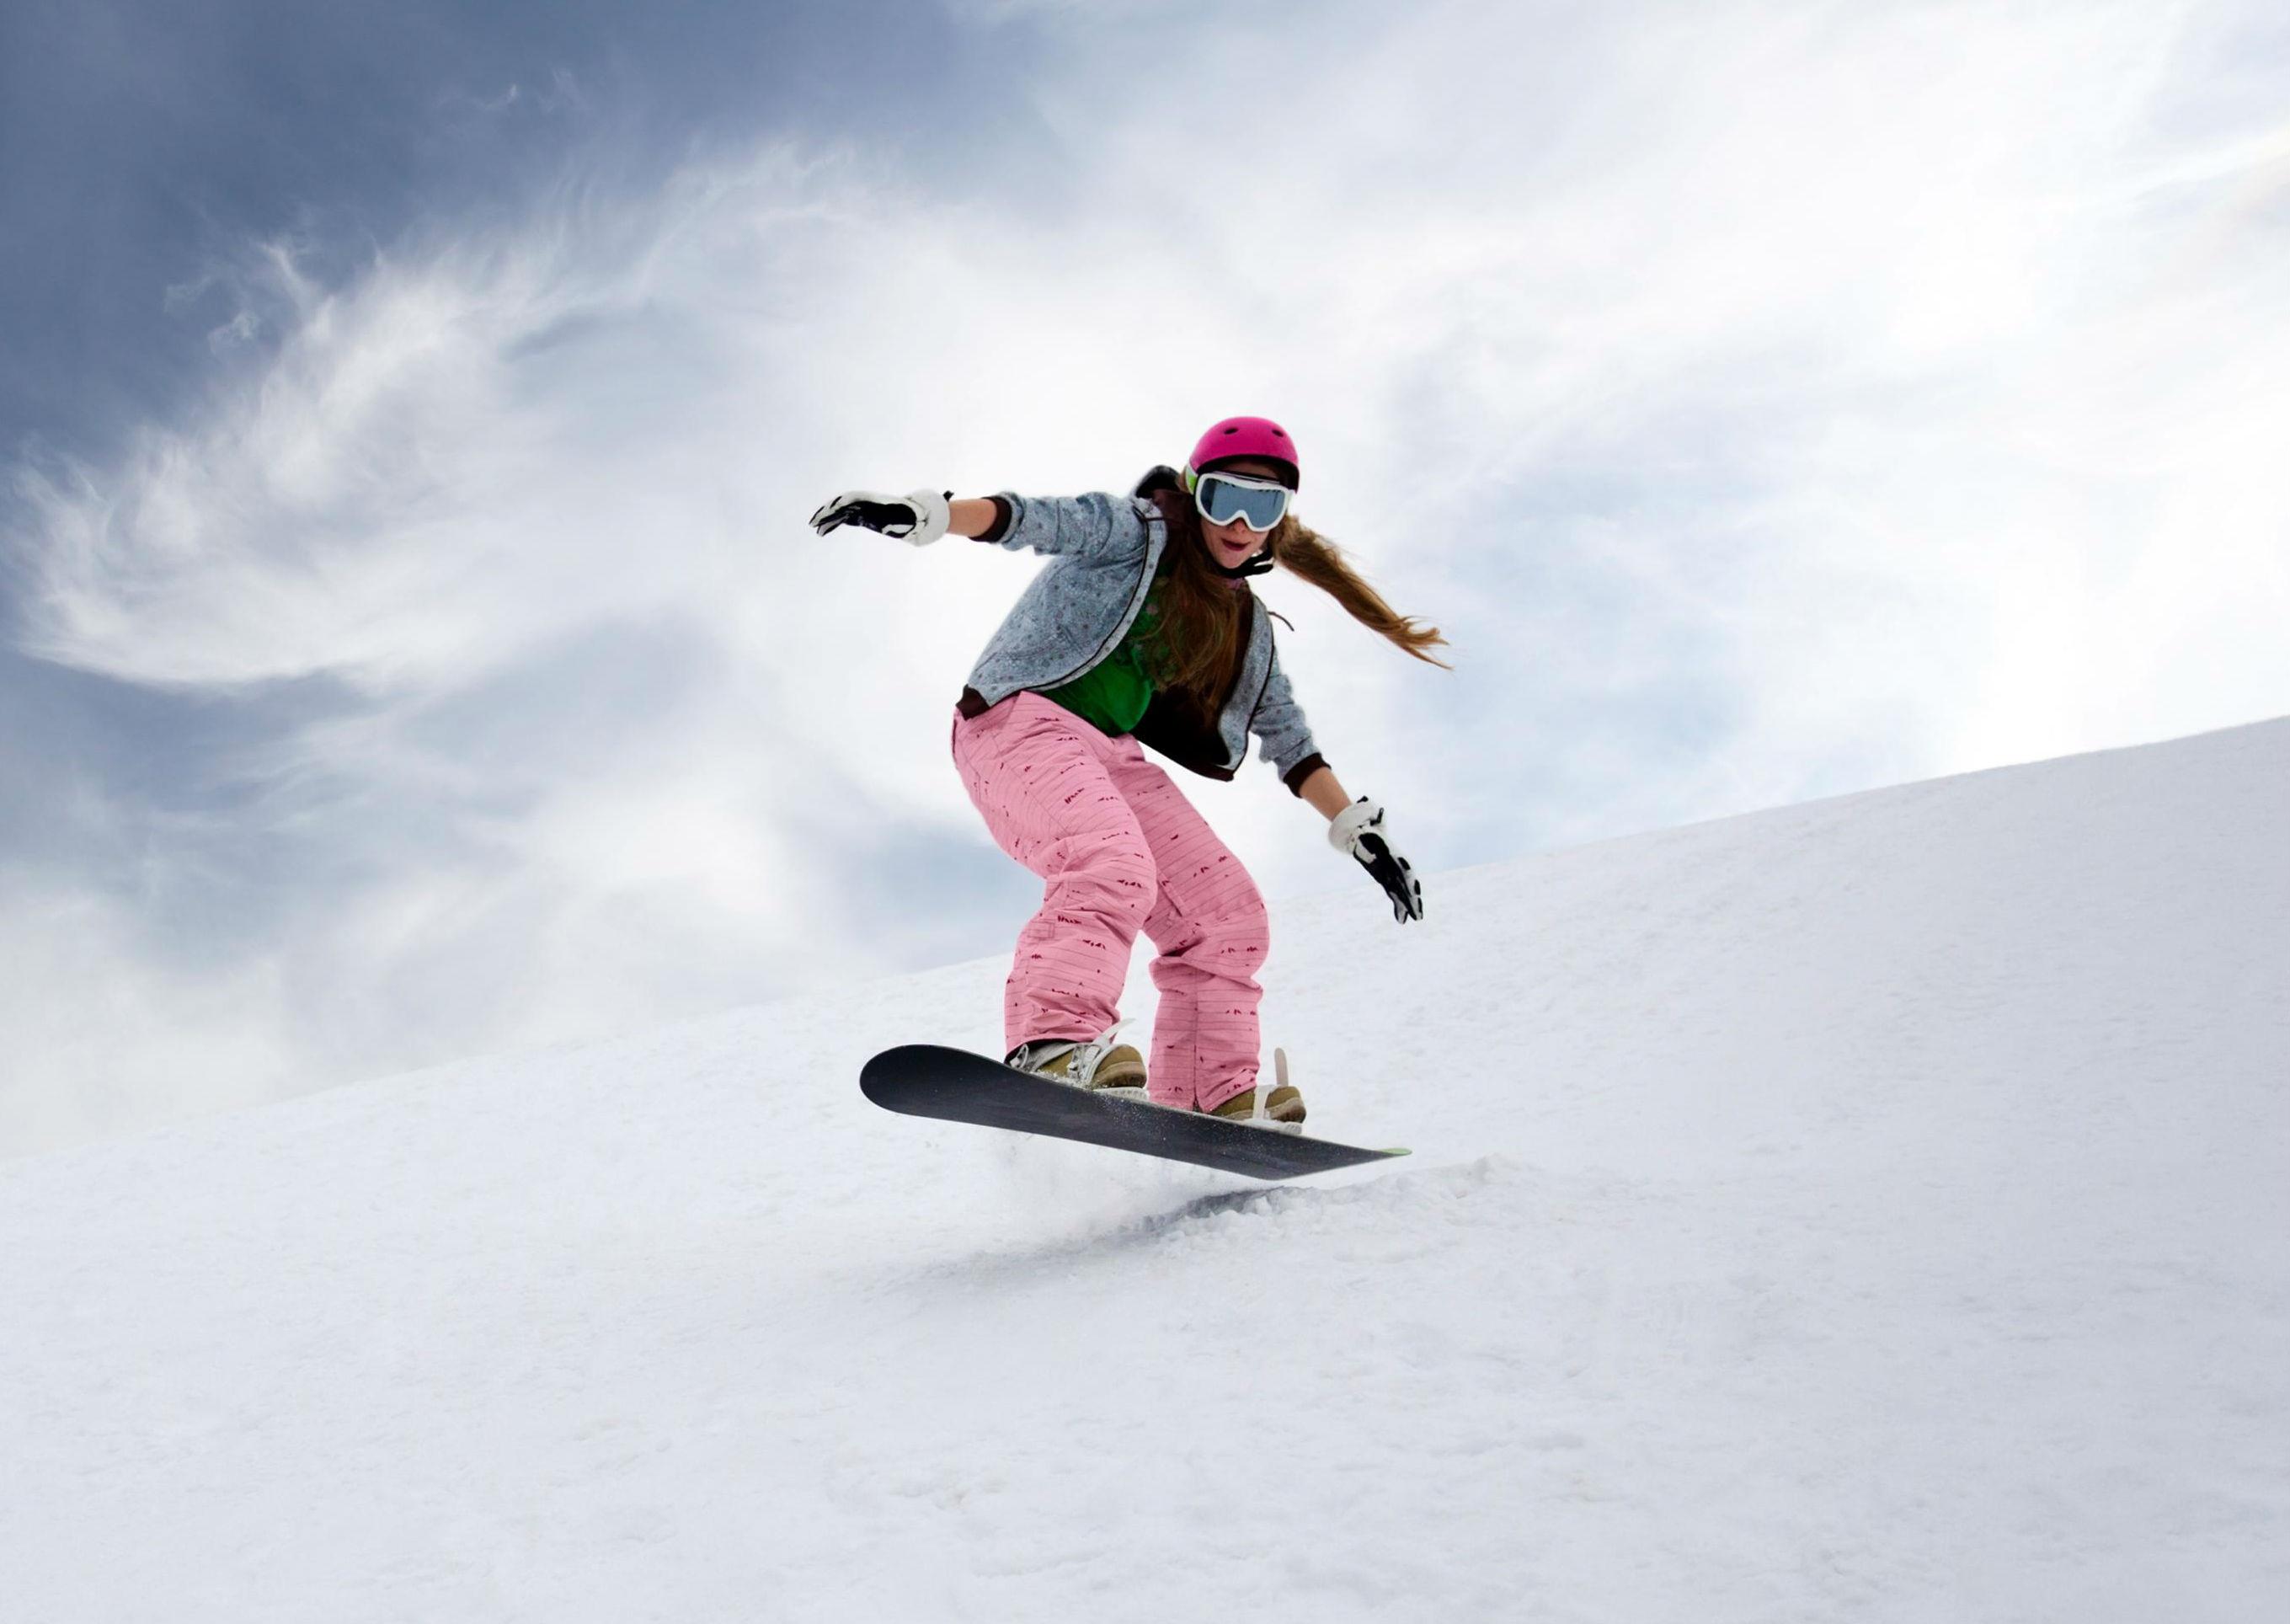 Private Snowboarding Lessons For Kids And Adults All Levels Scuola Di Sci E Snowboard Alpe Cimbra1 